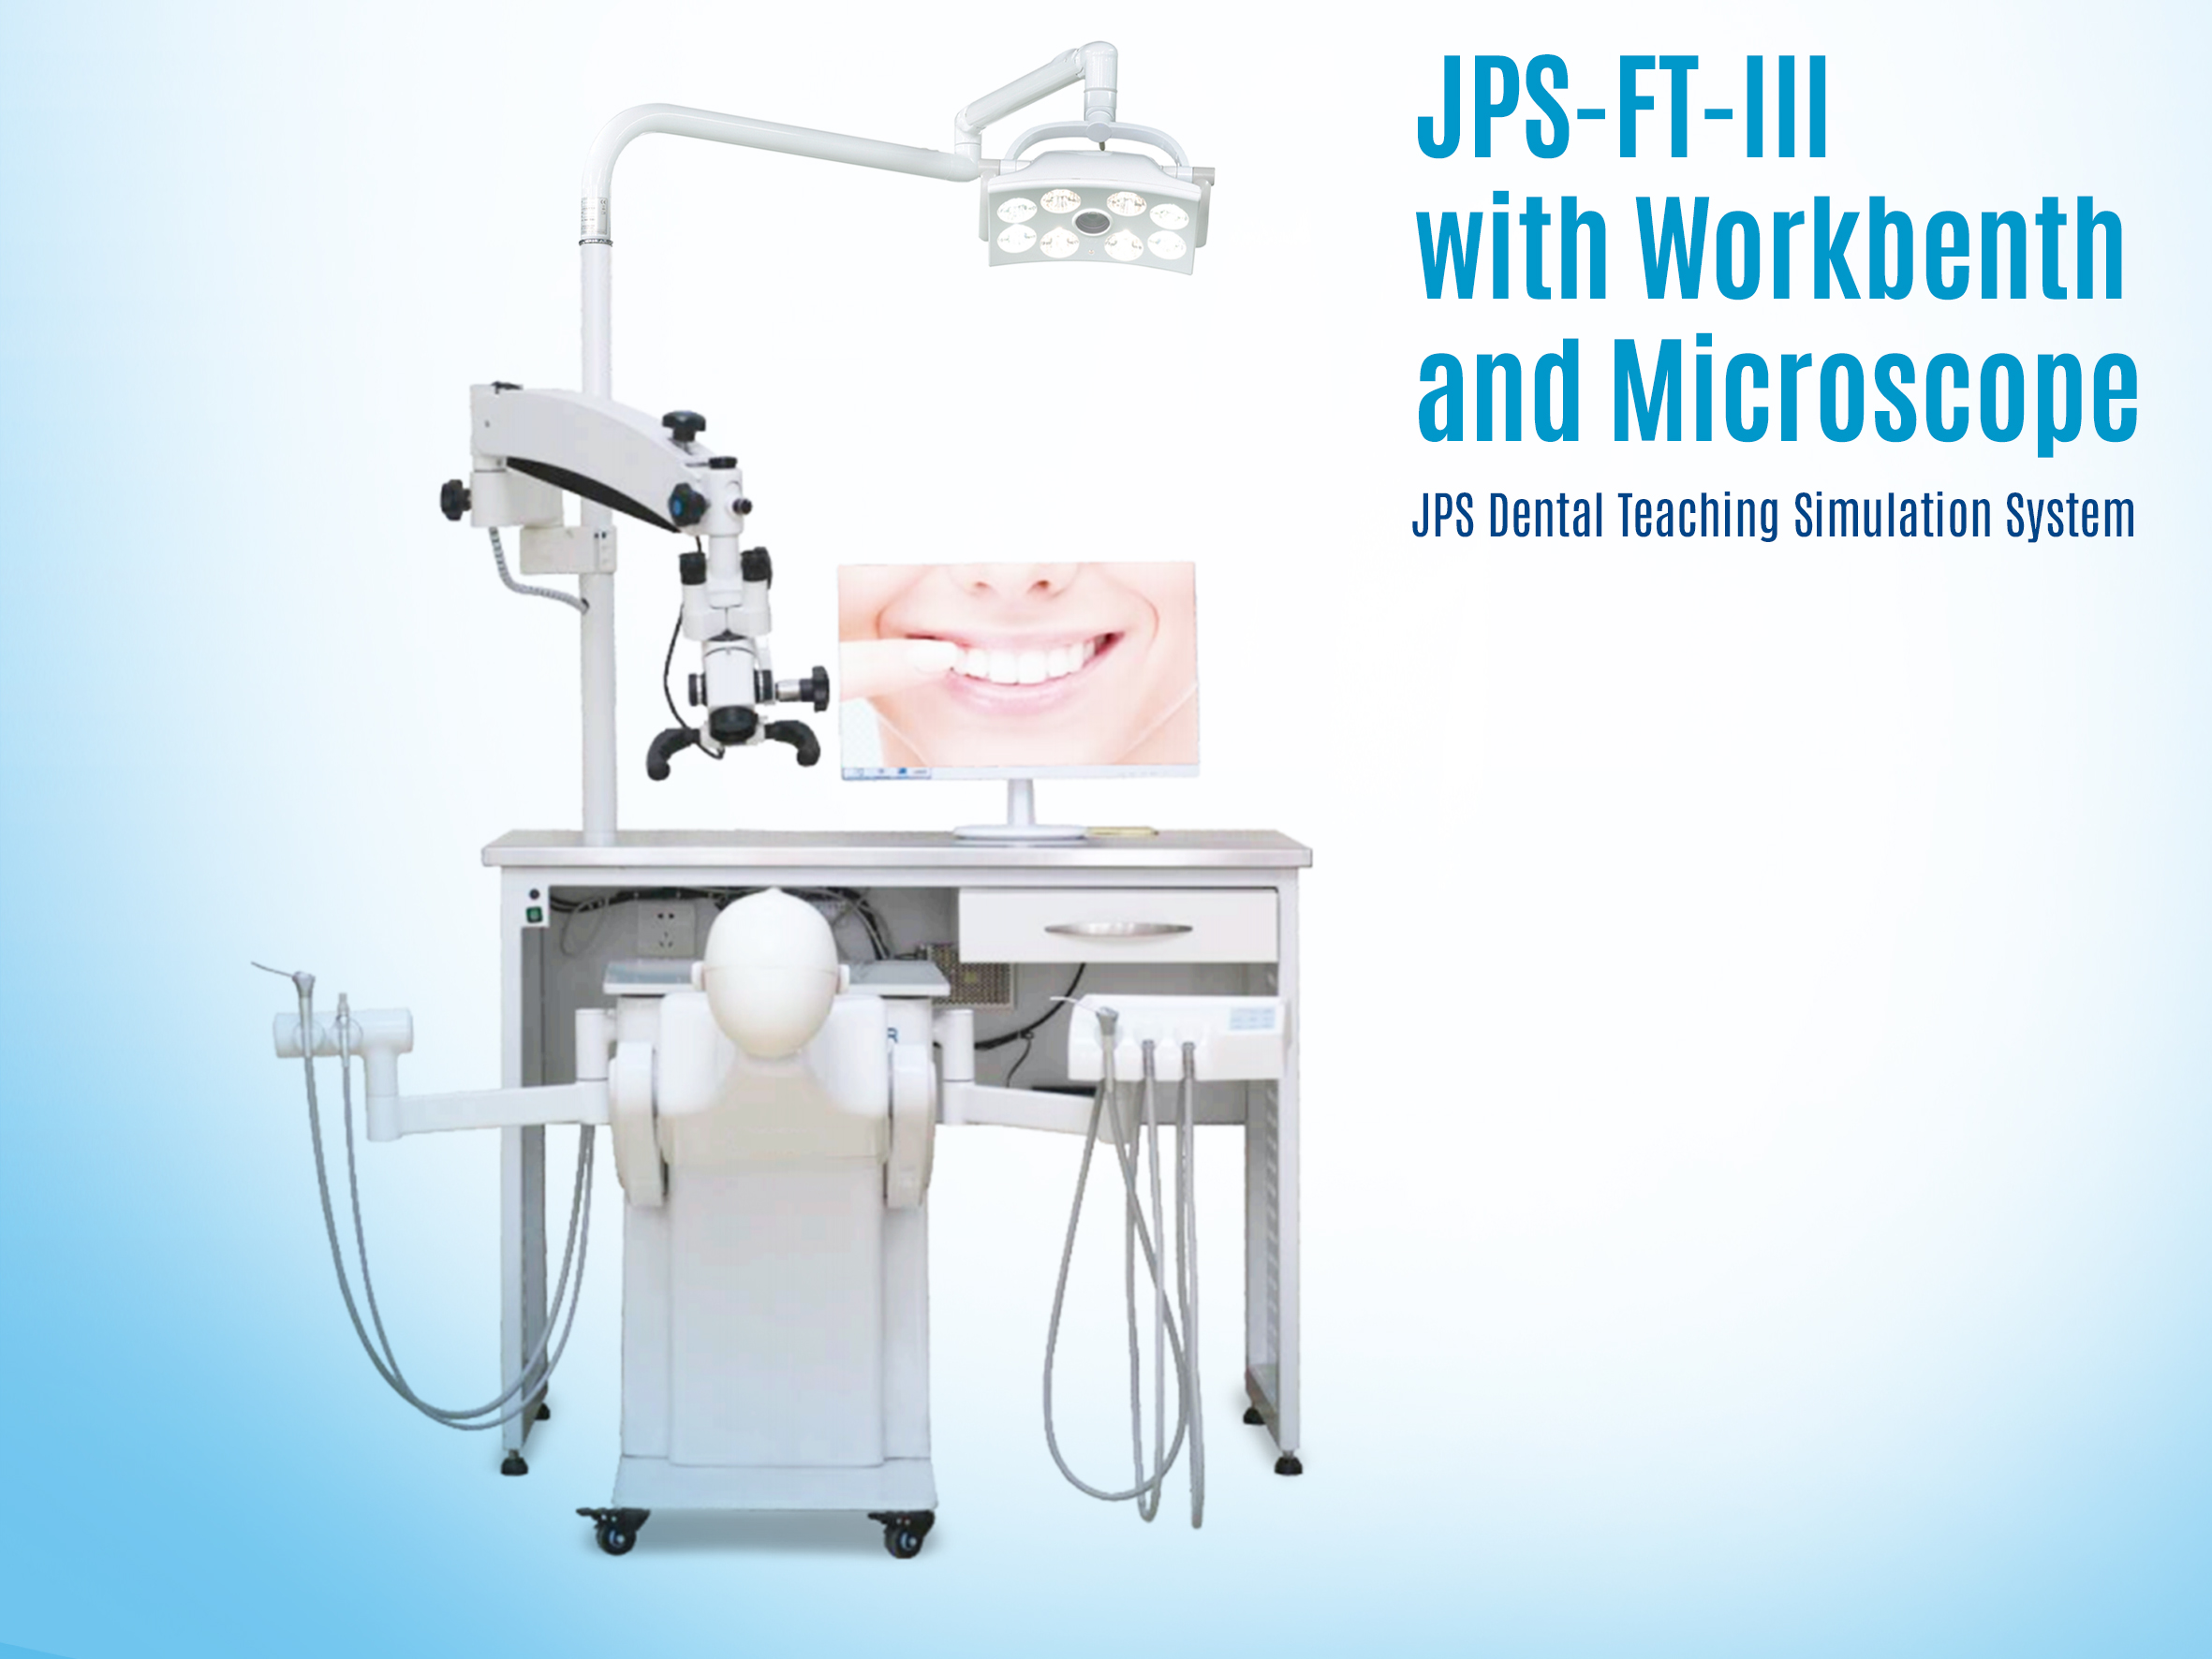 Shanghai JPS Medical Co., Ltd., 치과 교육을 위한 고급 "워크벤치 및 현미경을 갖춘 시뮬레이터" 공개